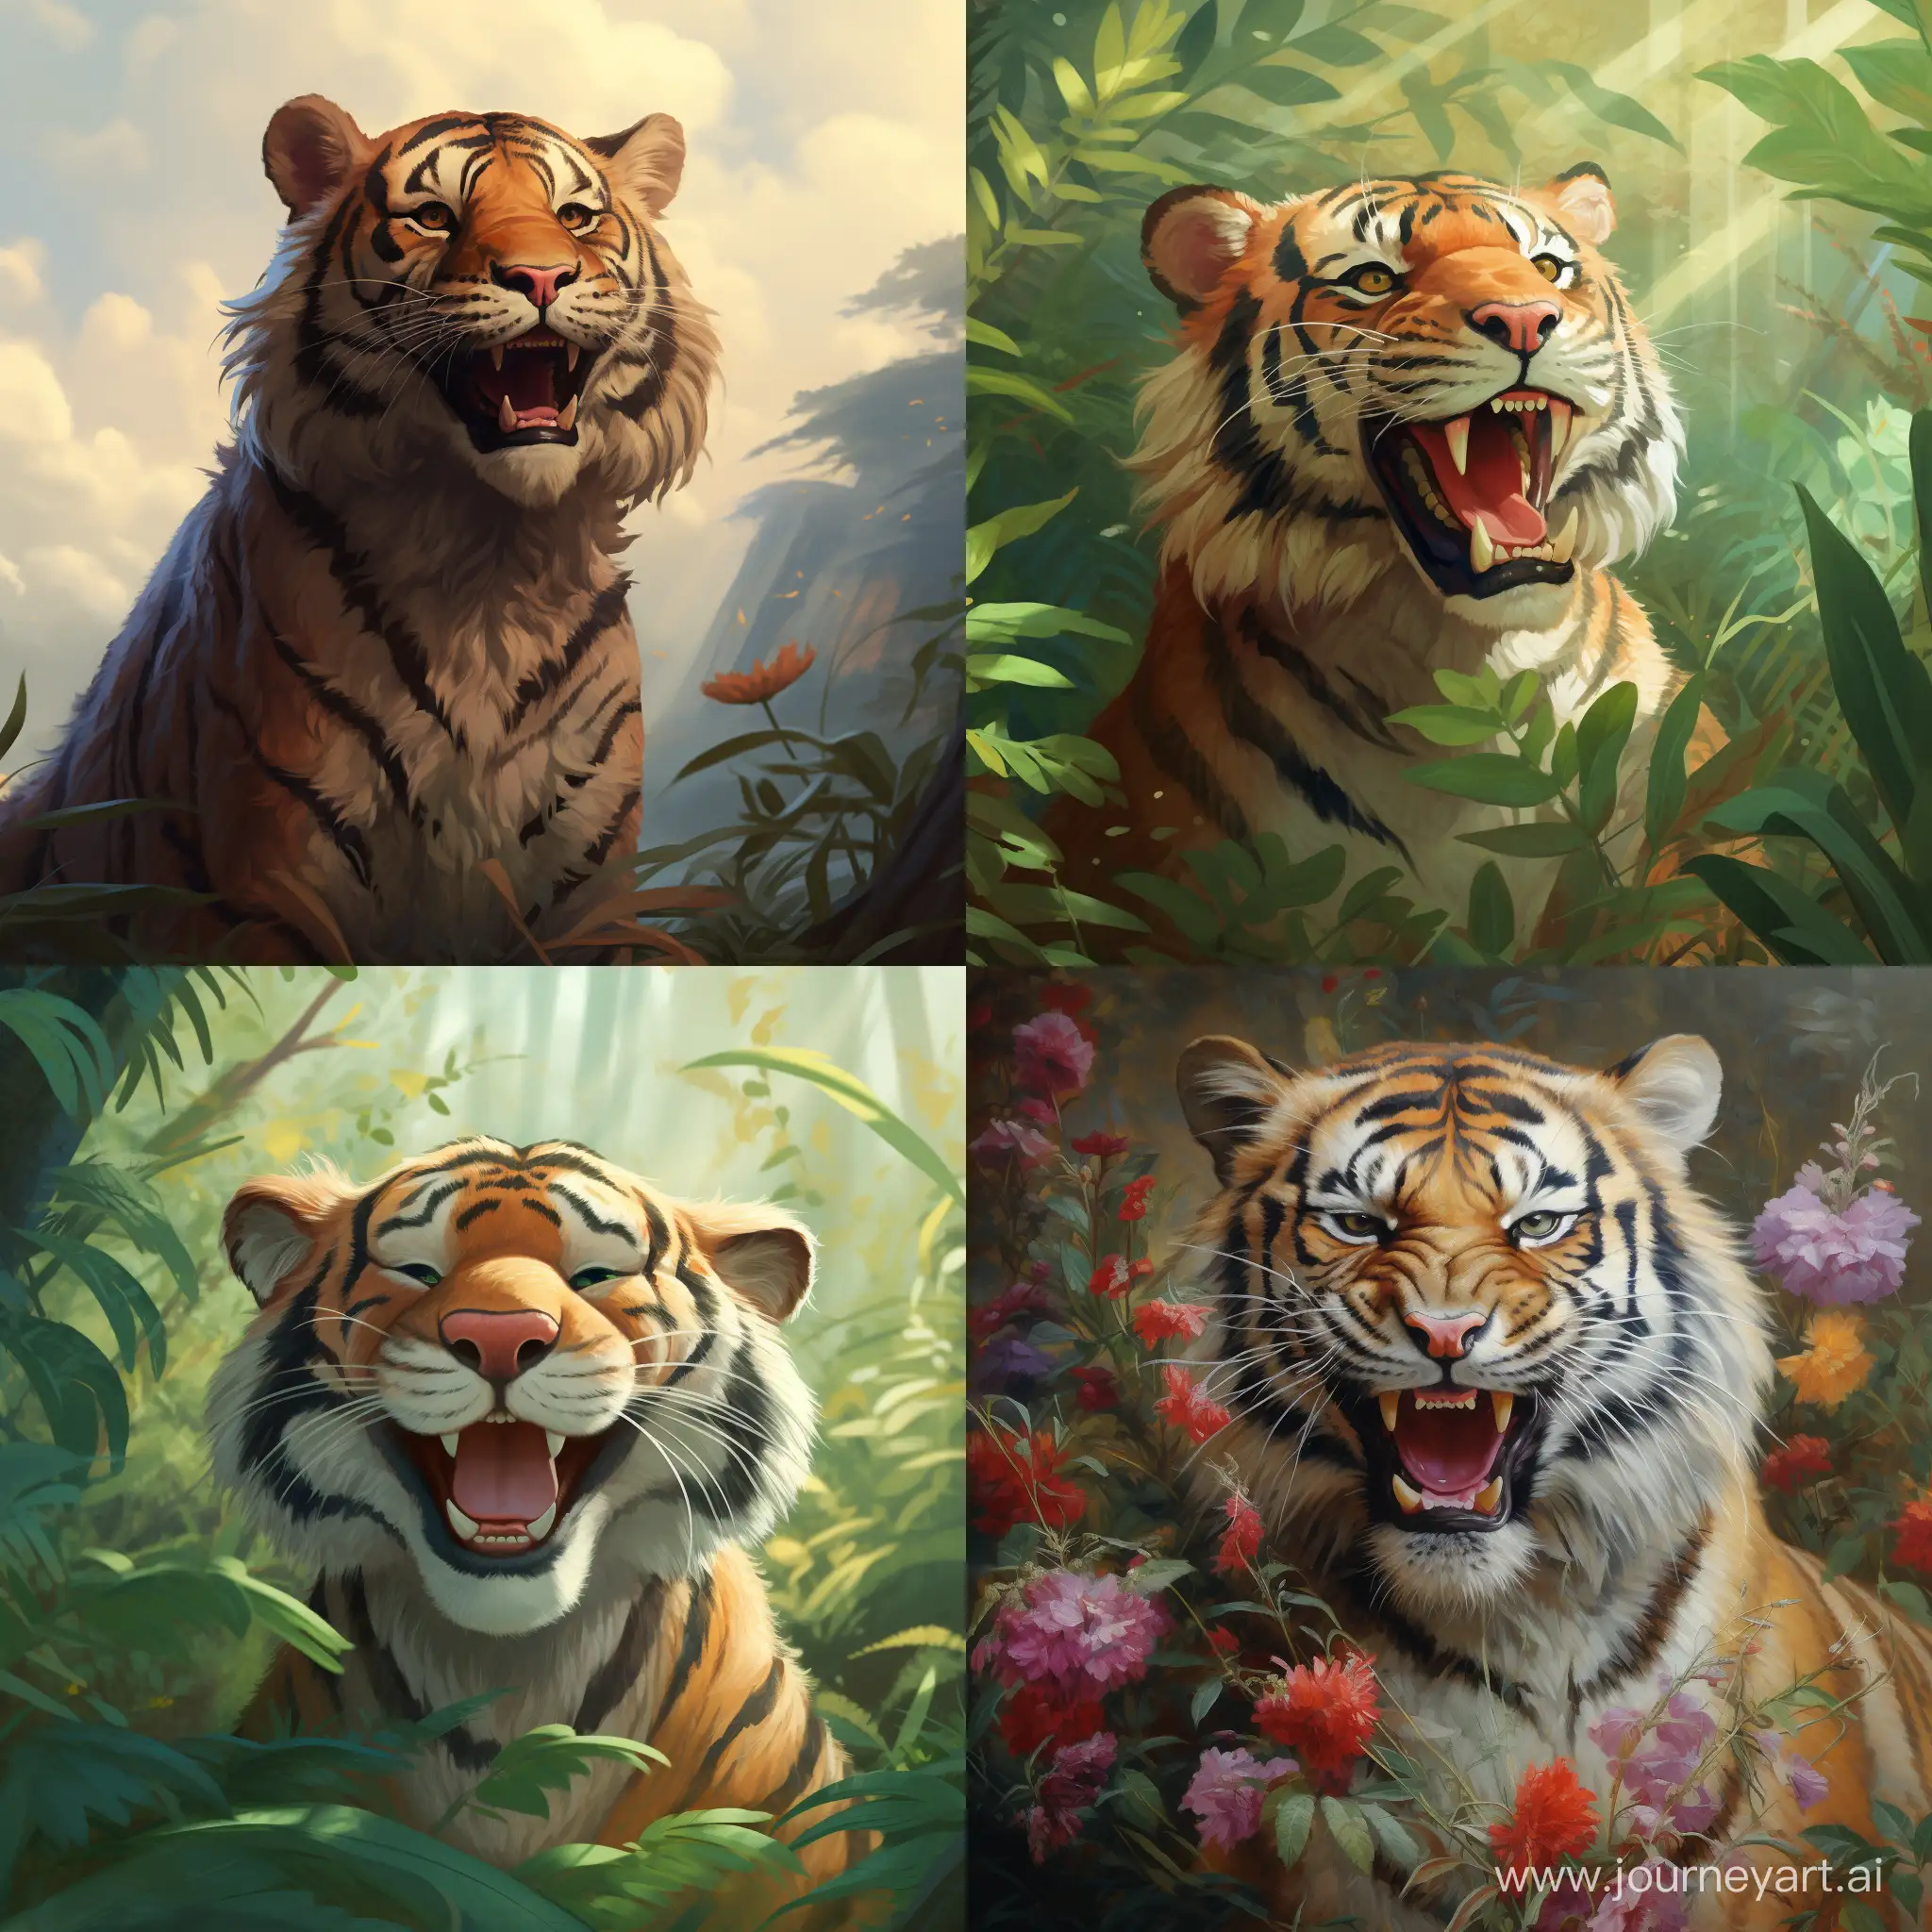 Joyful-Tiger-in-Natural-Habitat-Square-Image